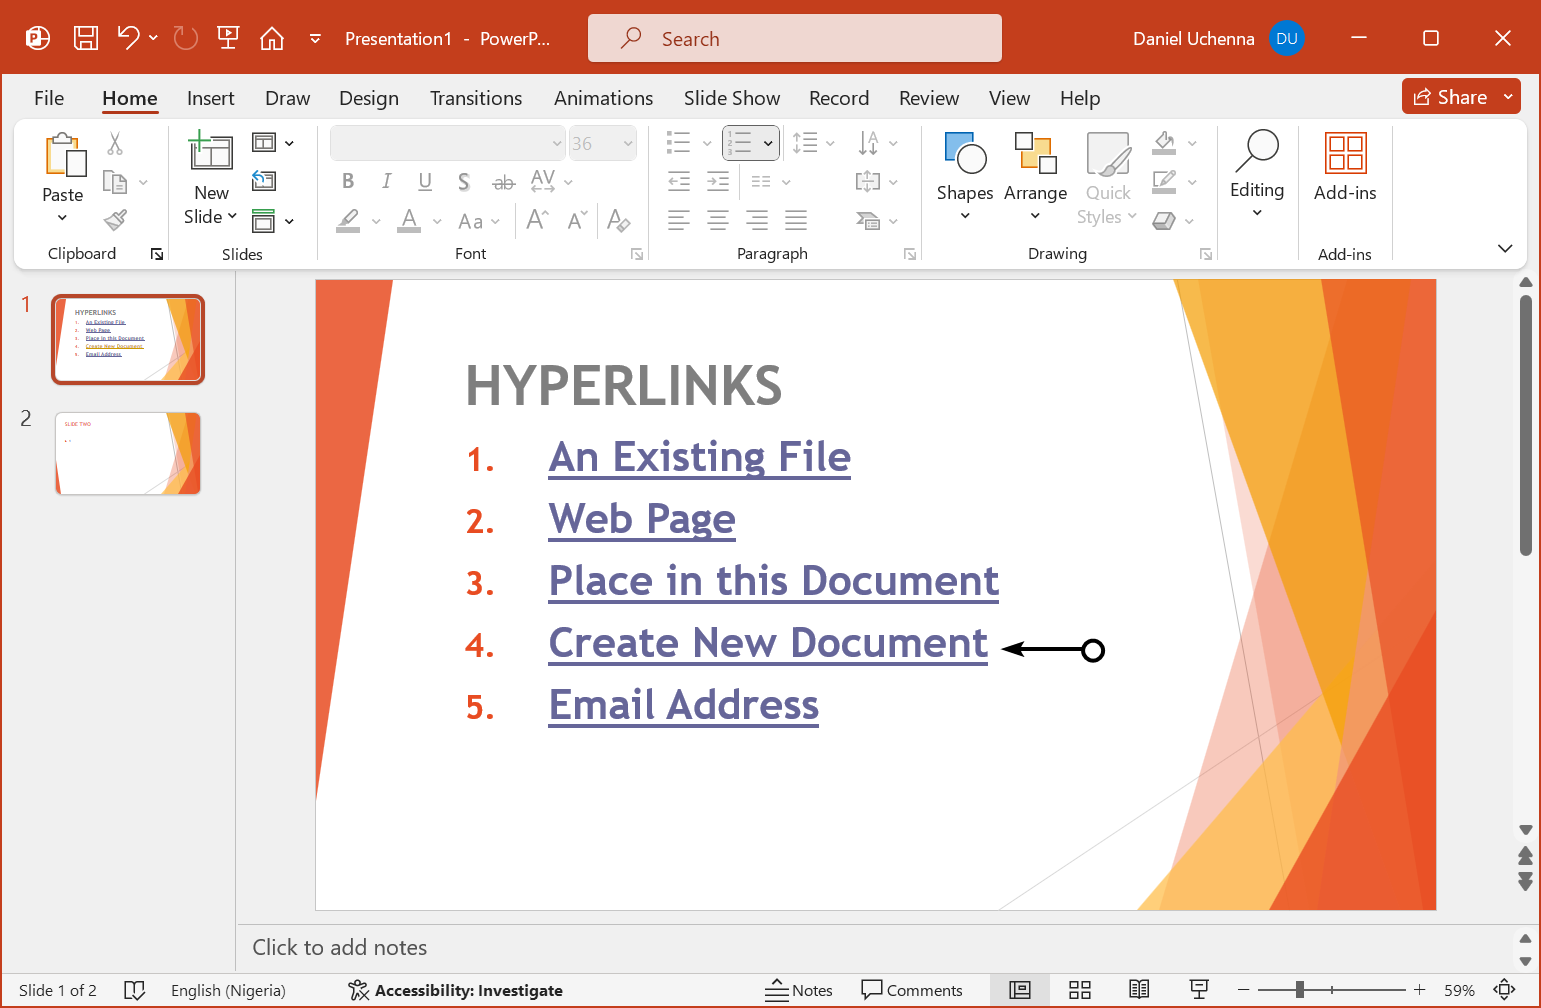 edit-hyperlink